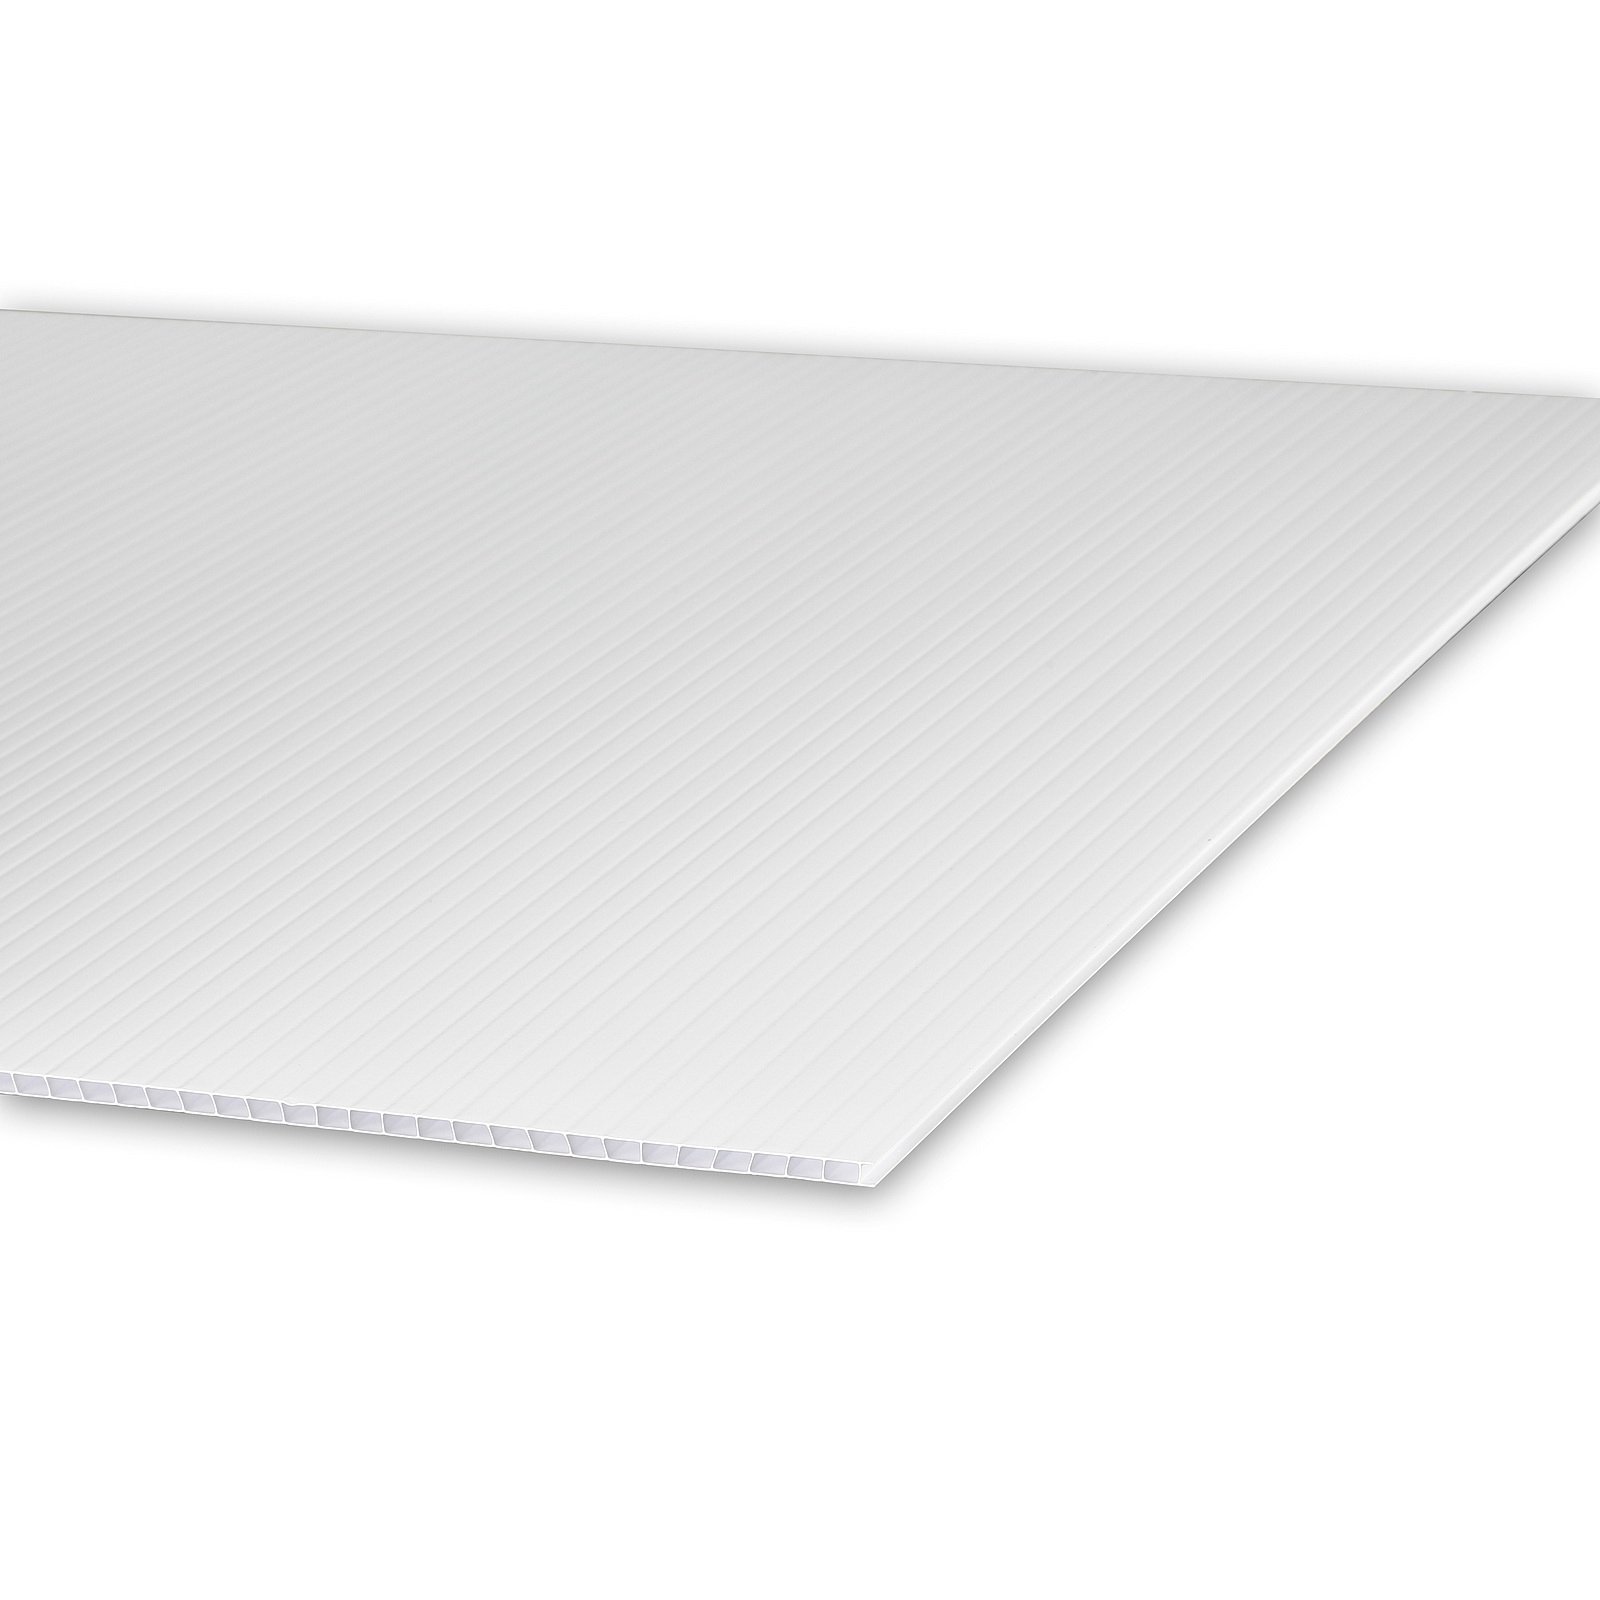 (1) 24''W x 18''H x 4mm White Corrugated Plastic Board and (1) Super Heavy Duty Stakes 10'' x 28'' (SKU: CB24-18W x PCHDSS10285)